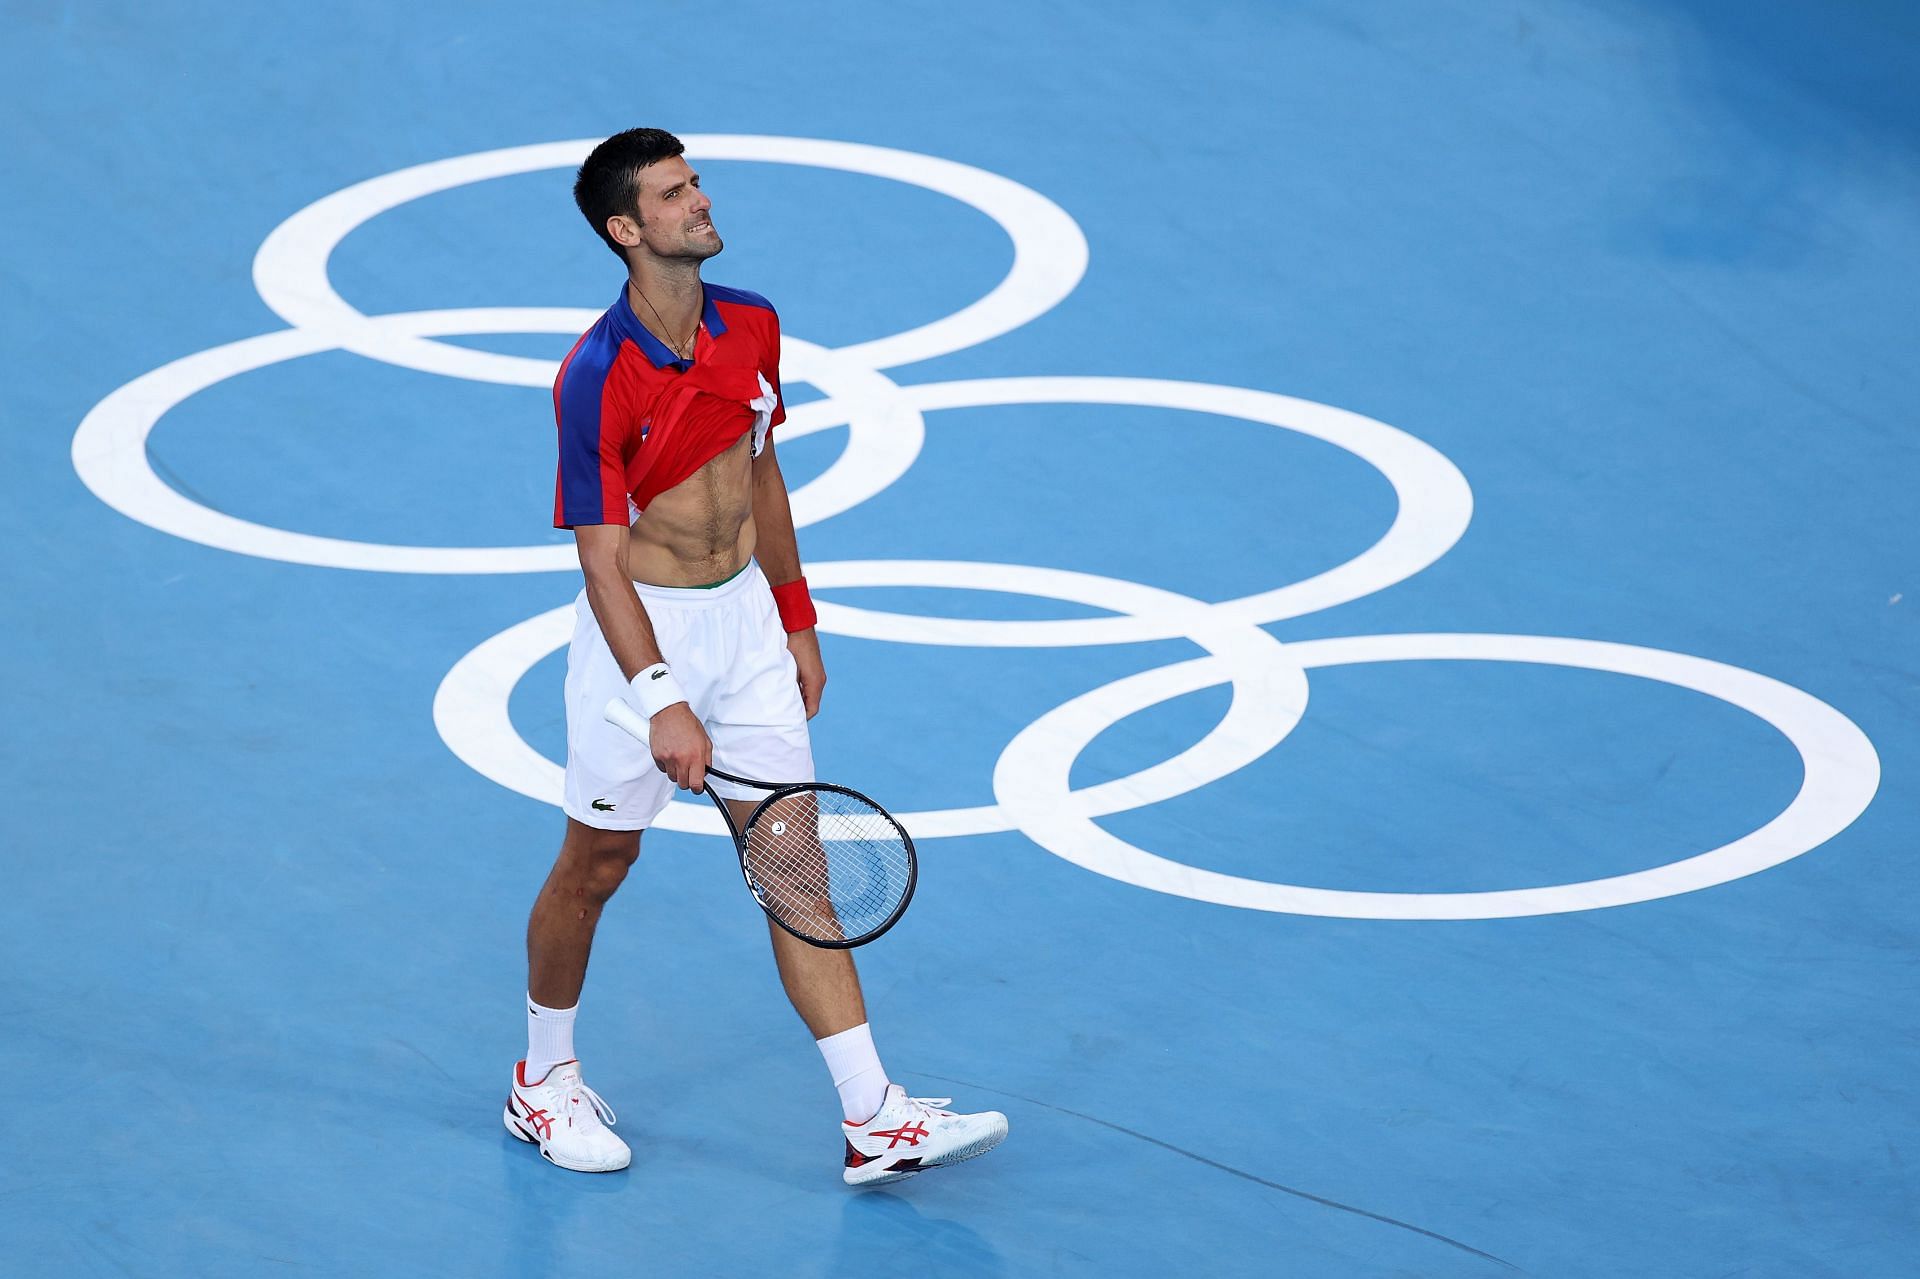 Novak Djokovic has one Olympic medal so far